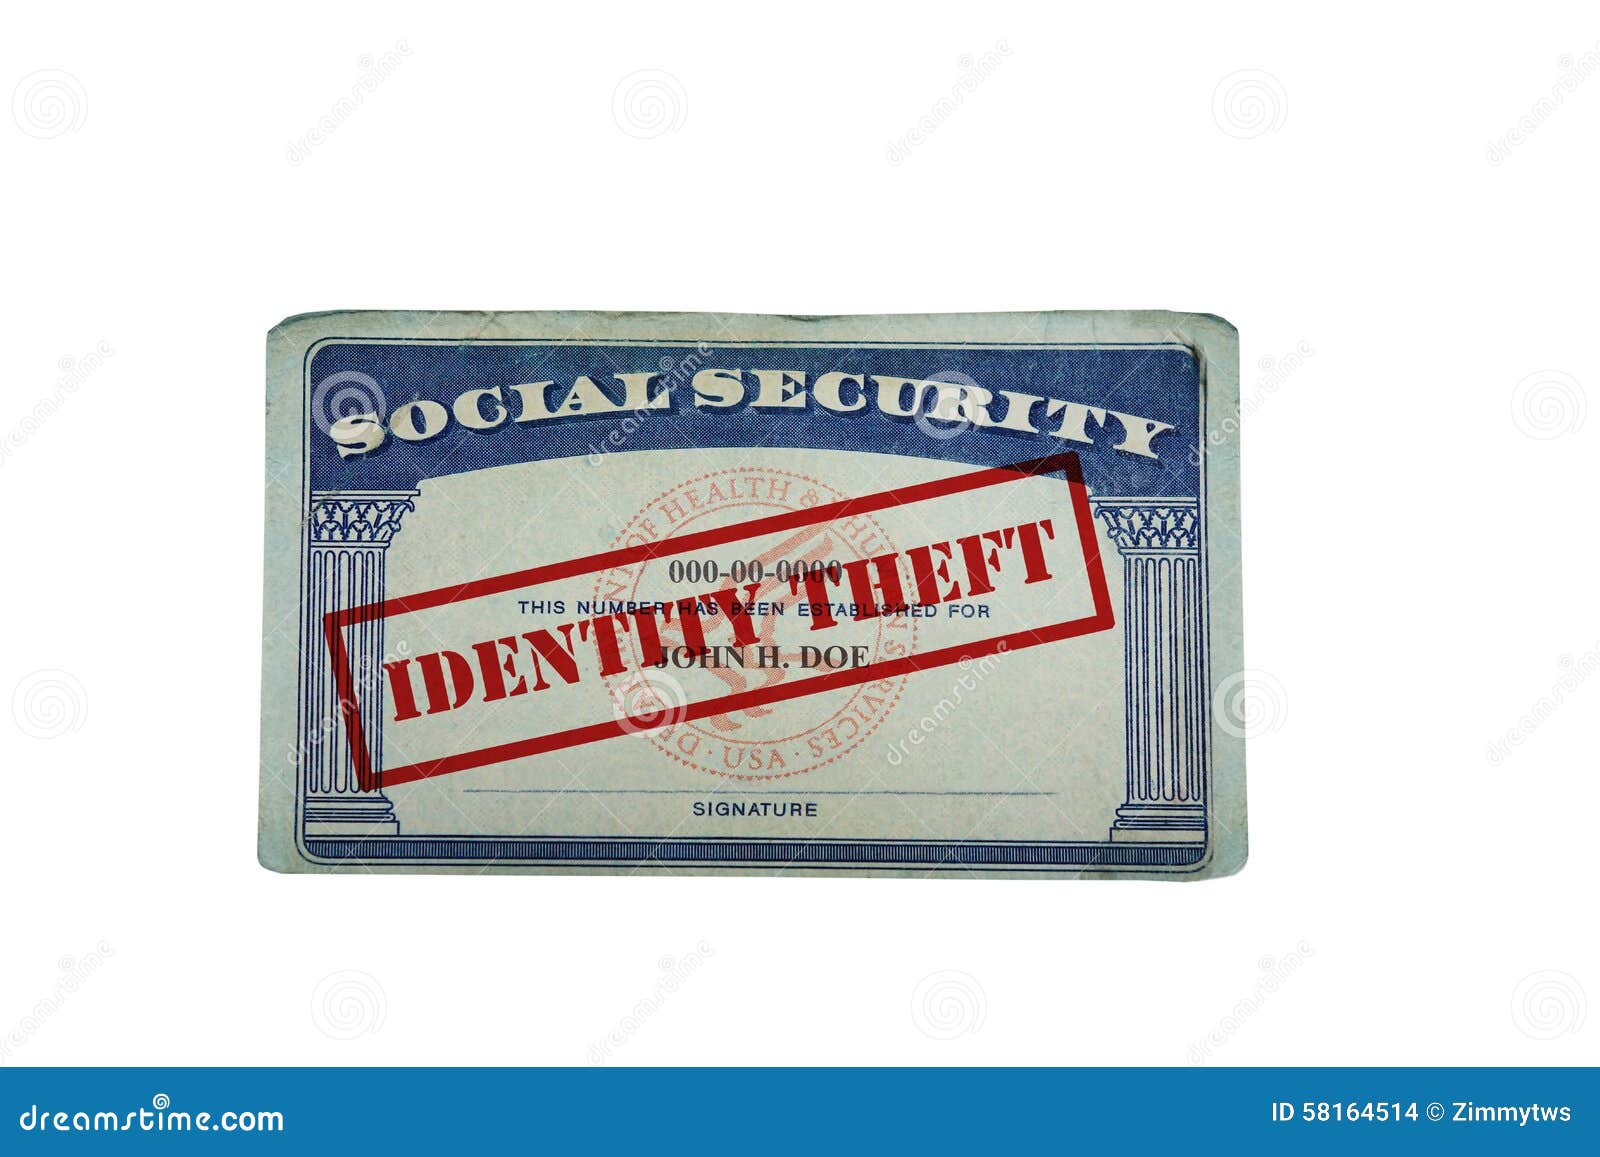 identity theft social security card